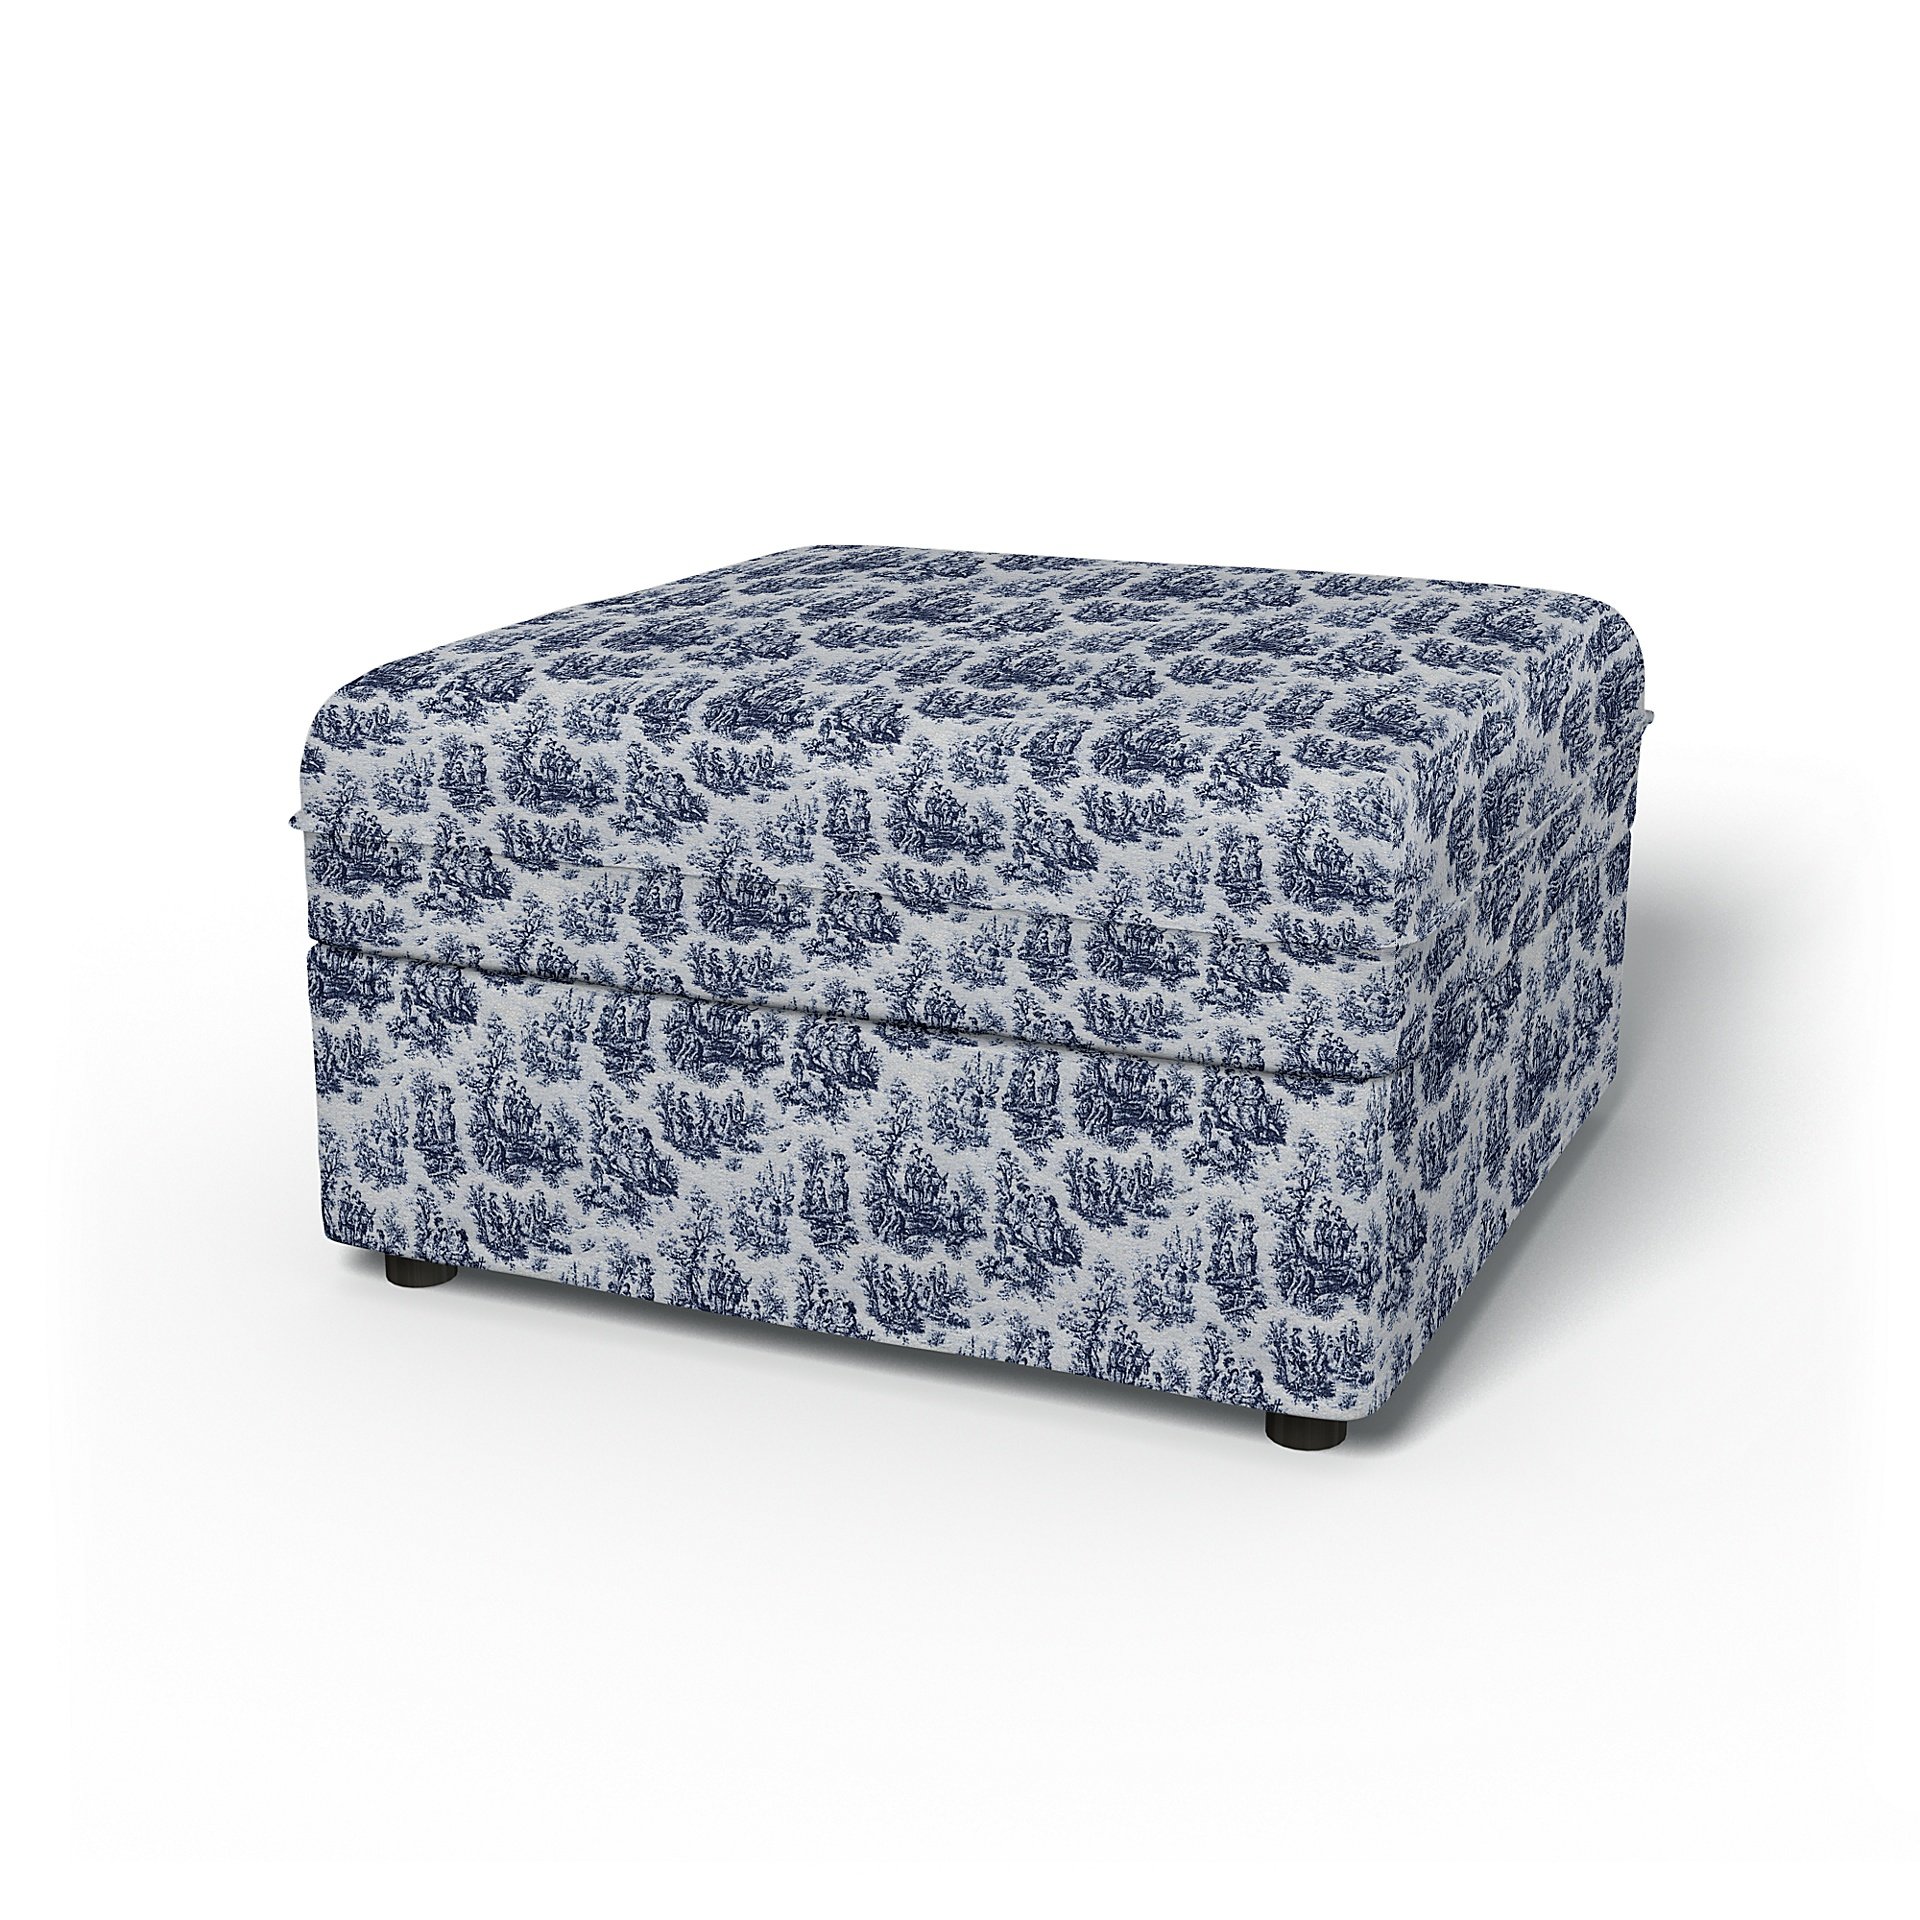 IKEA - Vallentuna Seat Module with Storage Cover 80x80cm 32x32in, Dark Blue, Boucle & Texture - Bemz